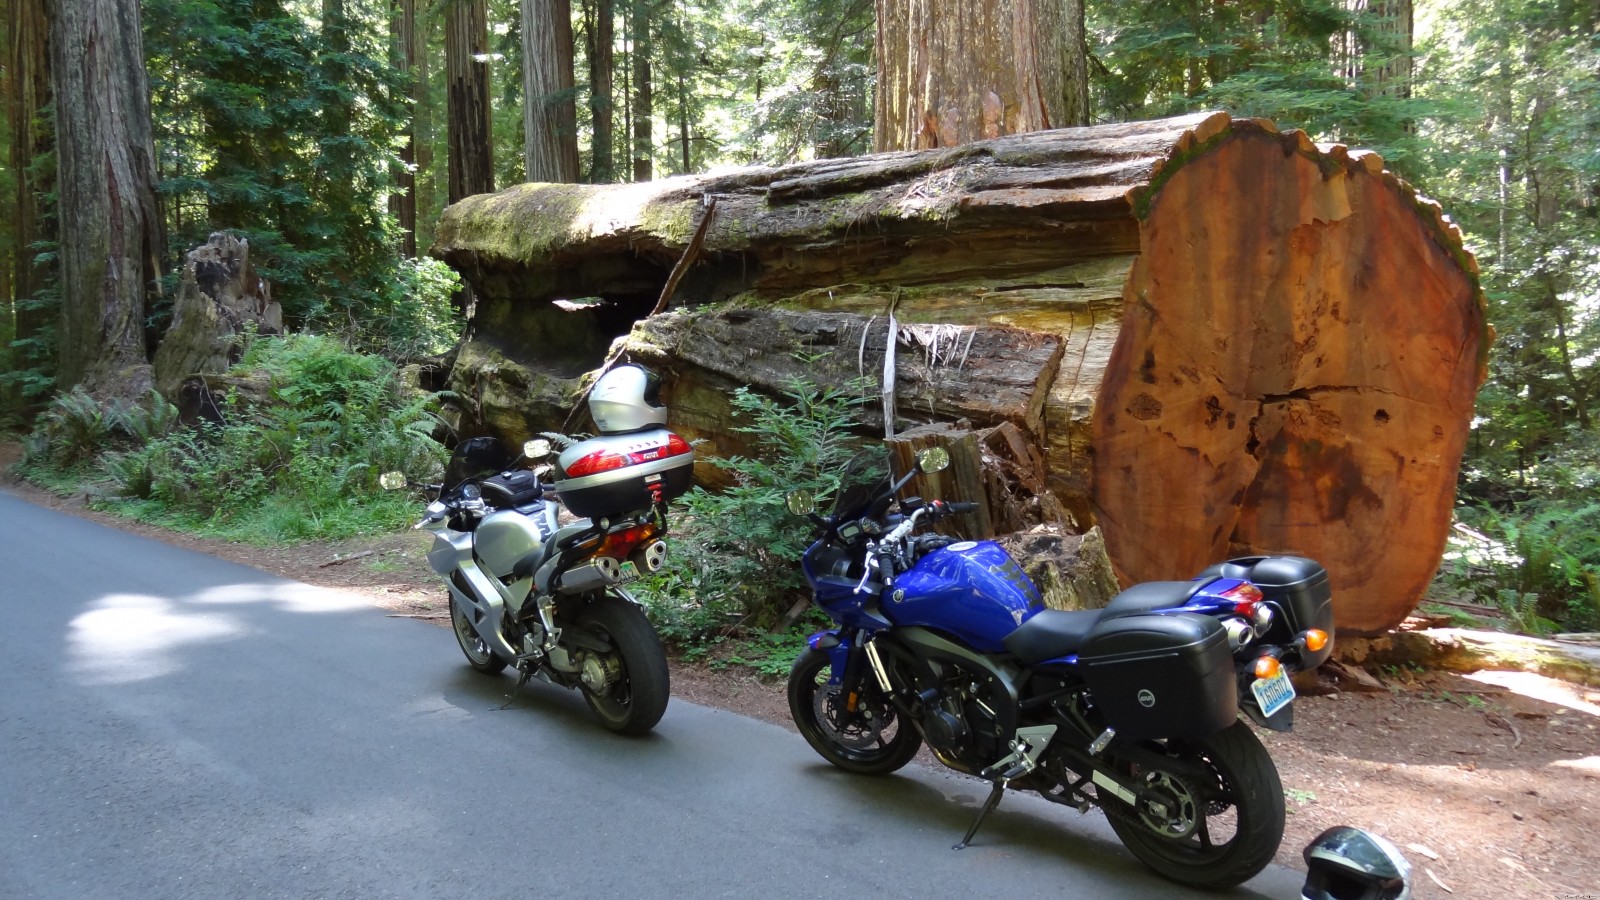 Ride through the Redwoods